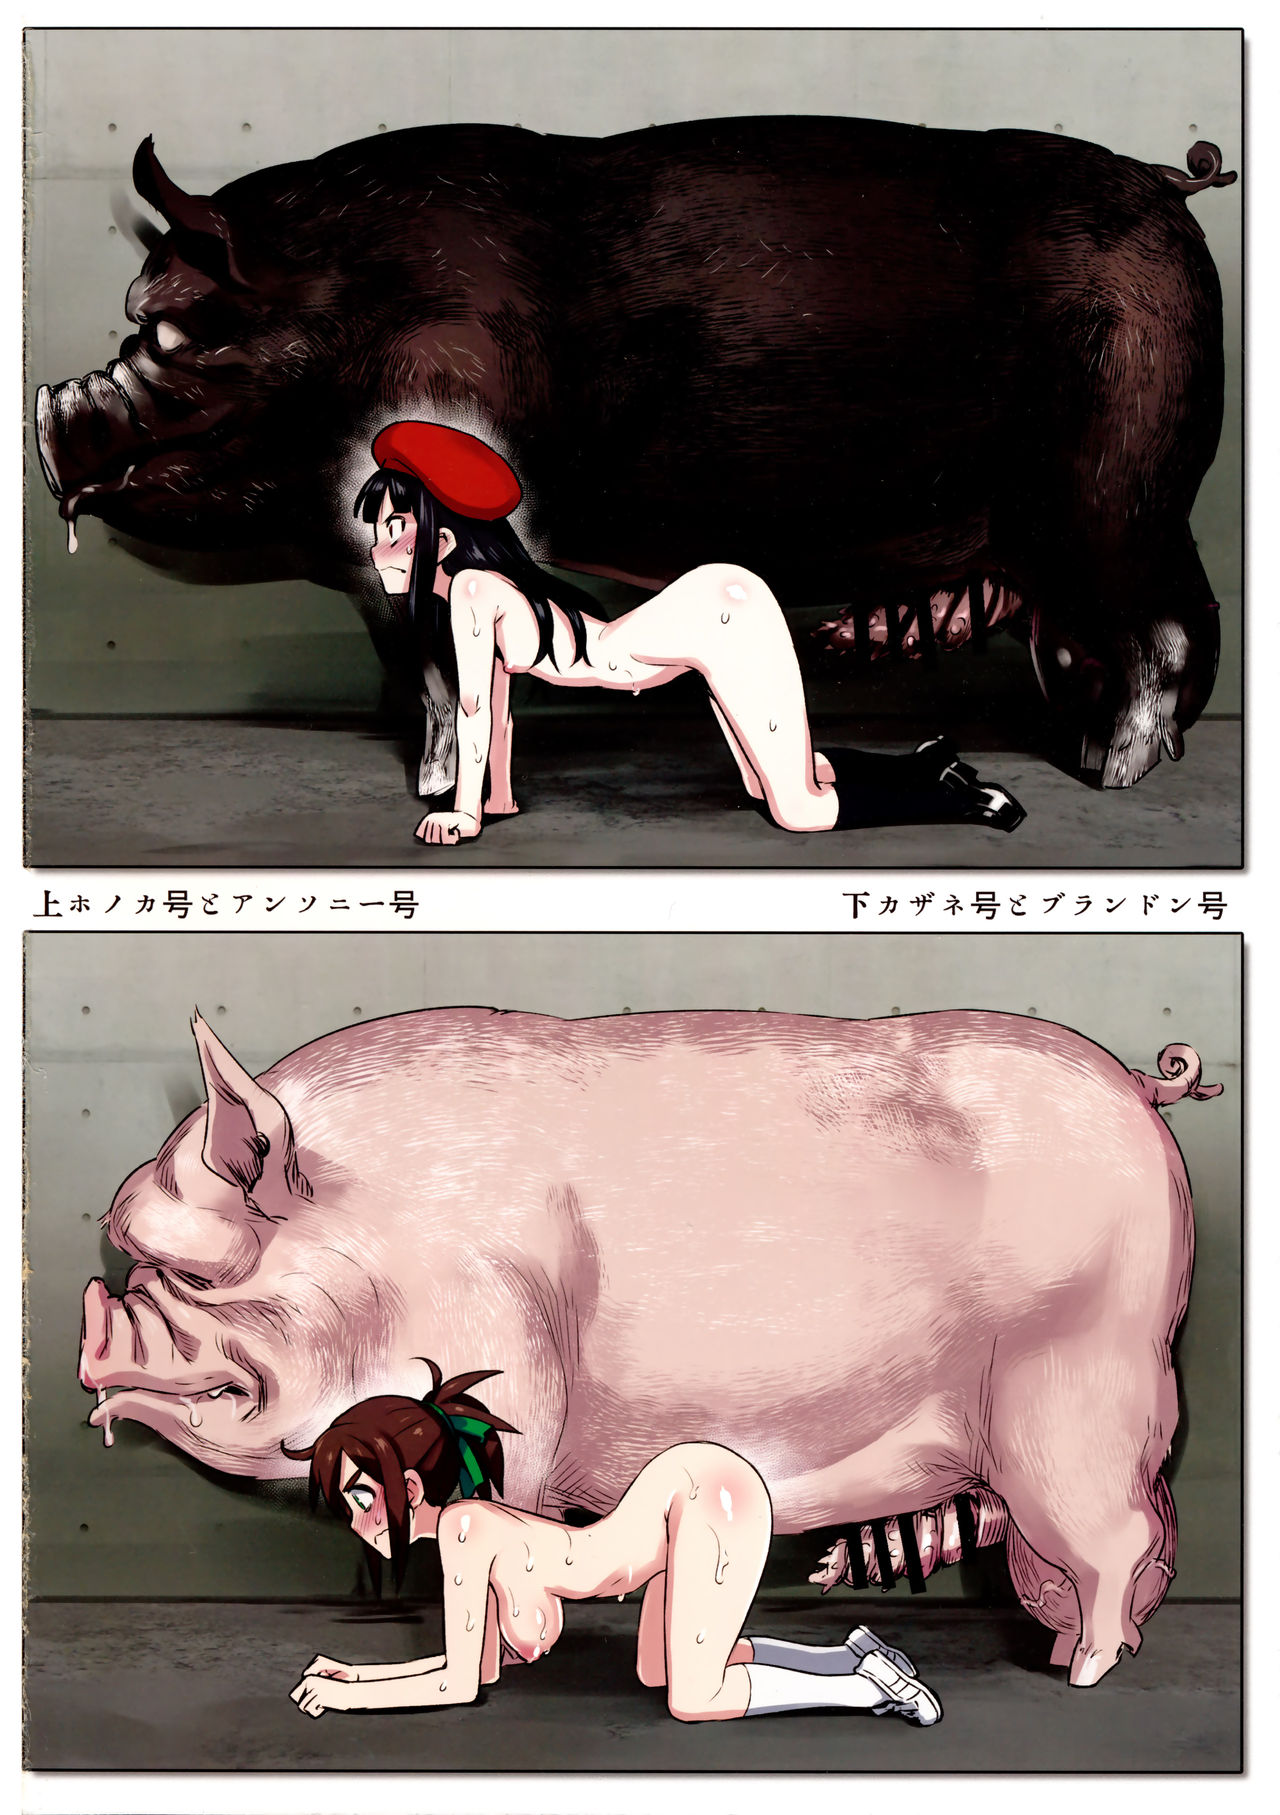 Порно комиксы со свиньями фото 67